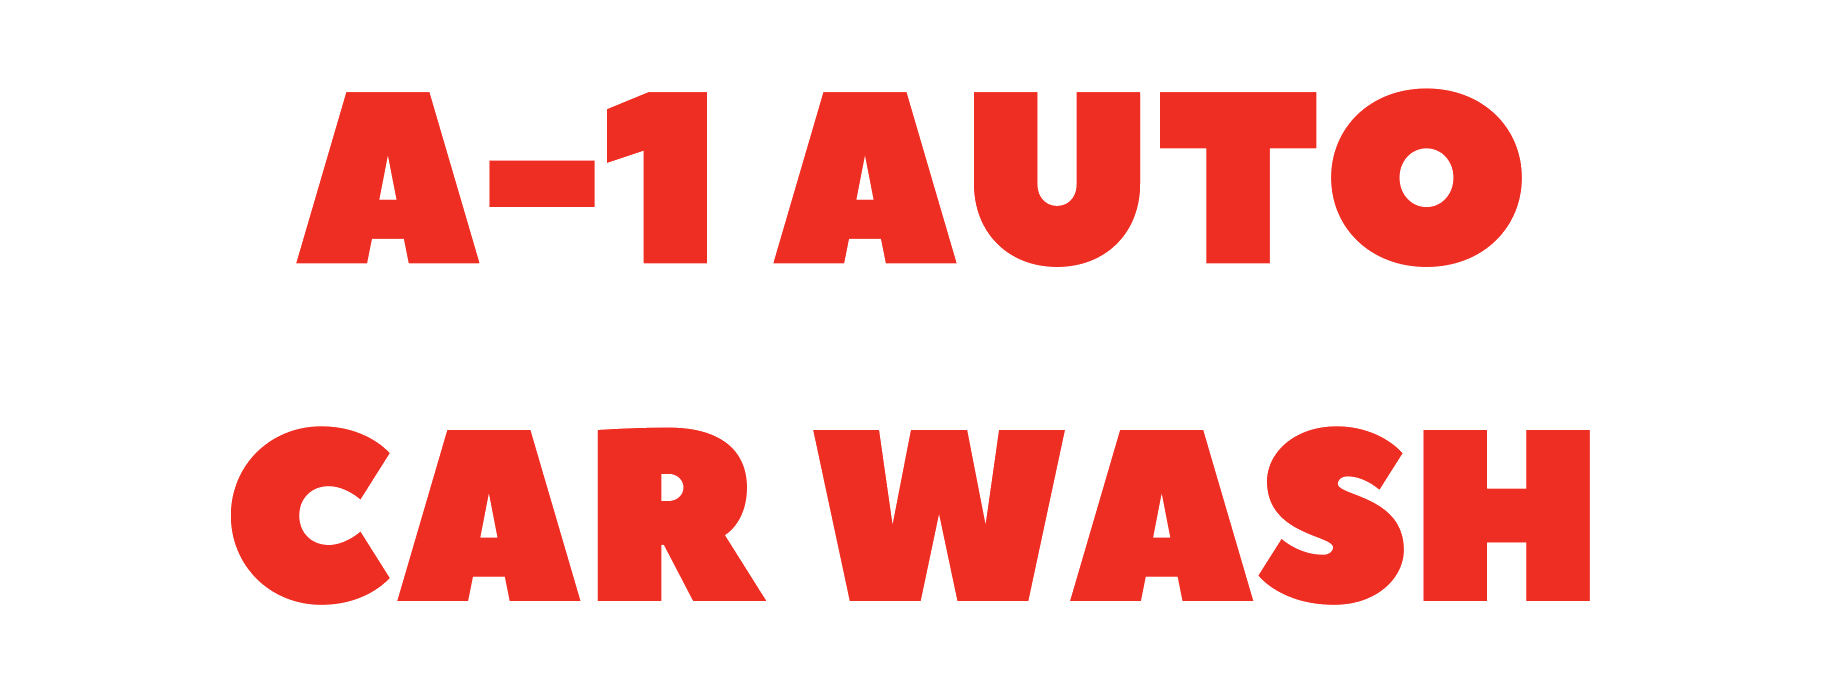 A-1 Auto Car Wash